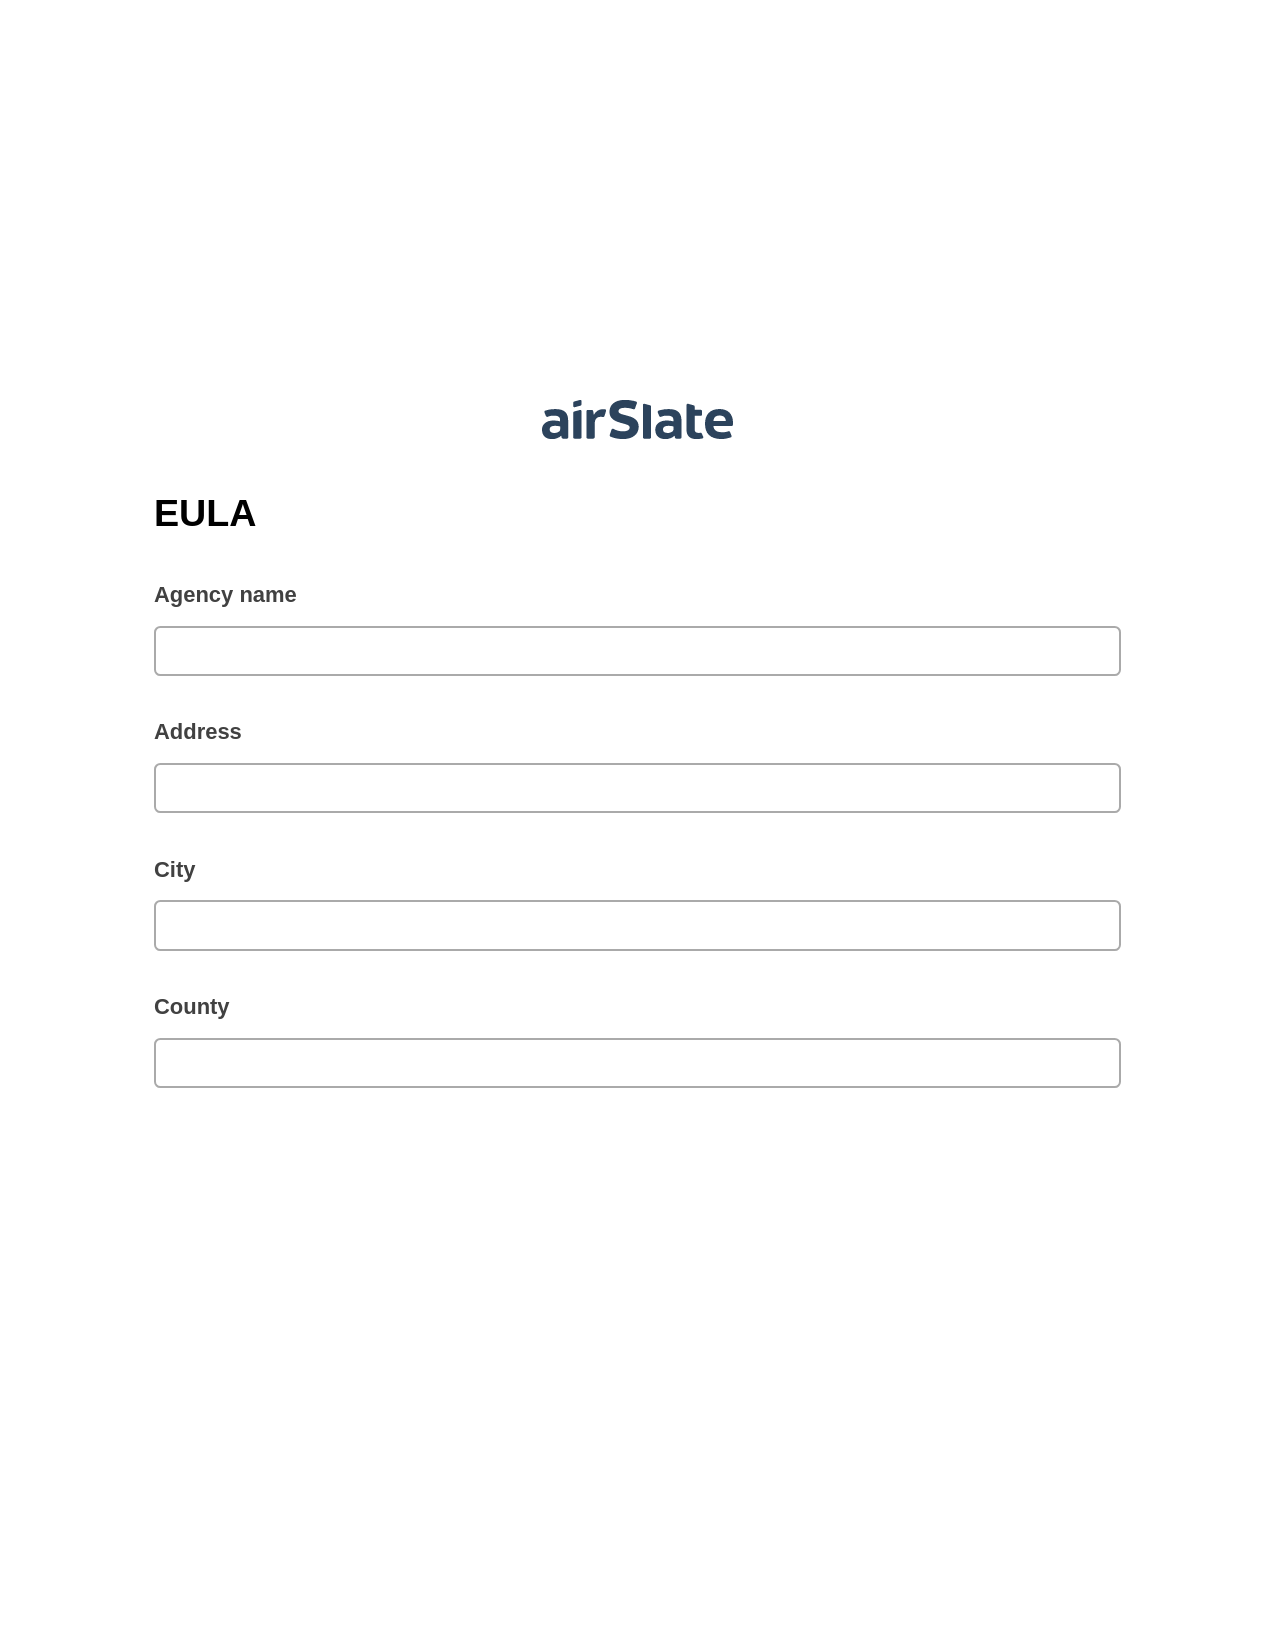 Multirole EULA Pre-fill Slate from MS Dynamics 365 Records Bot, Webhook Bot, Email Notification Postfinish Bot